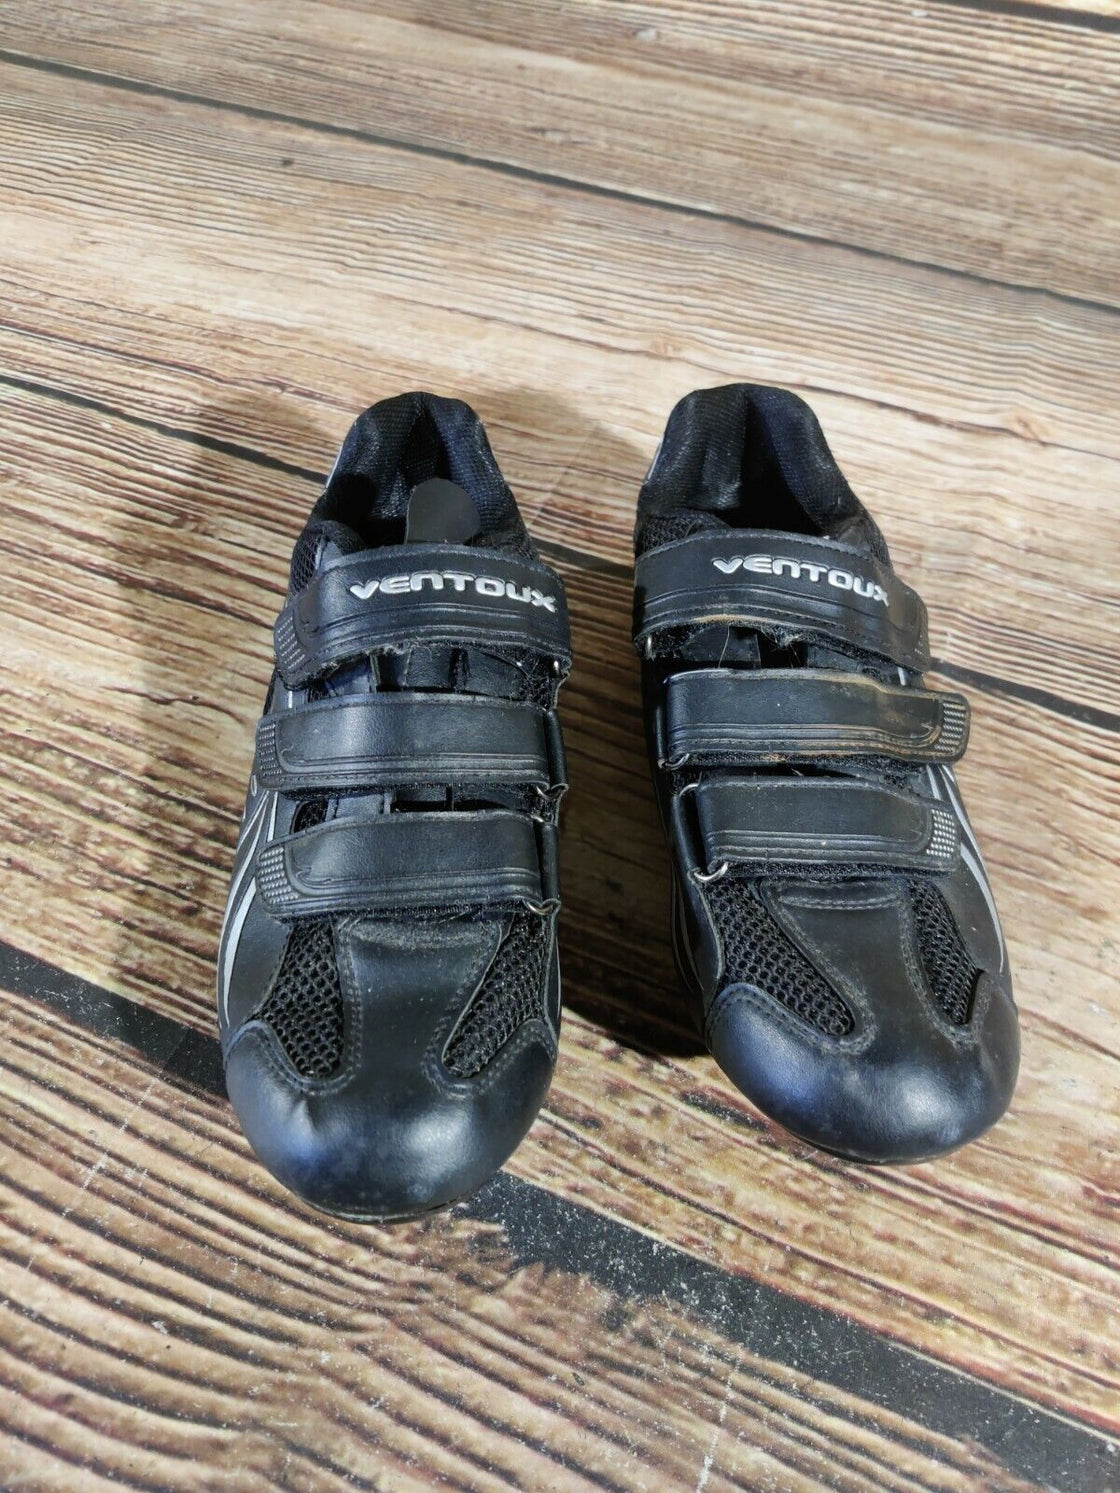 VENTOUX Road Cycling Shoes Biking Boots 3 Bolts Size EU40, US7